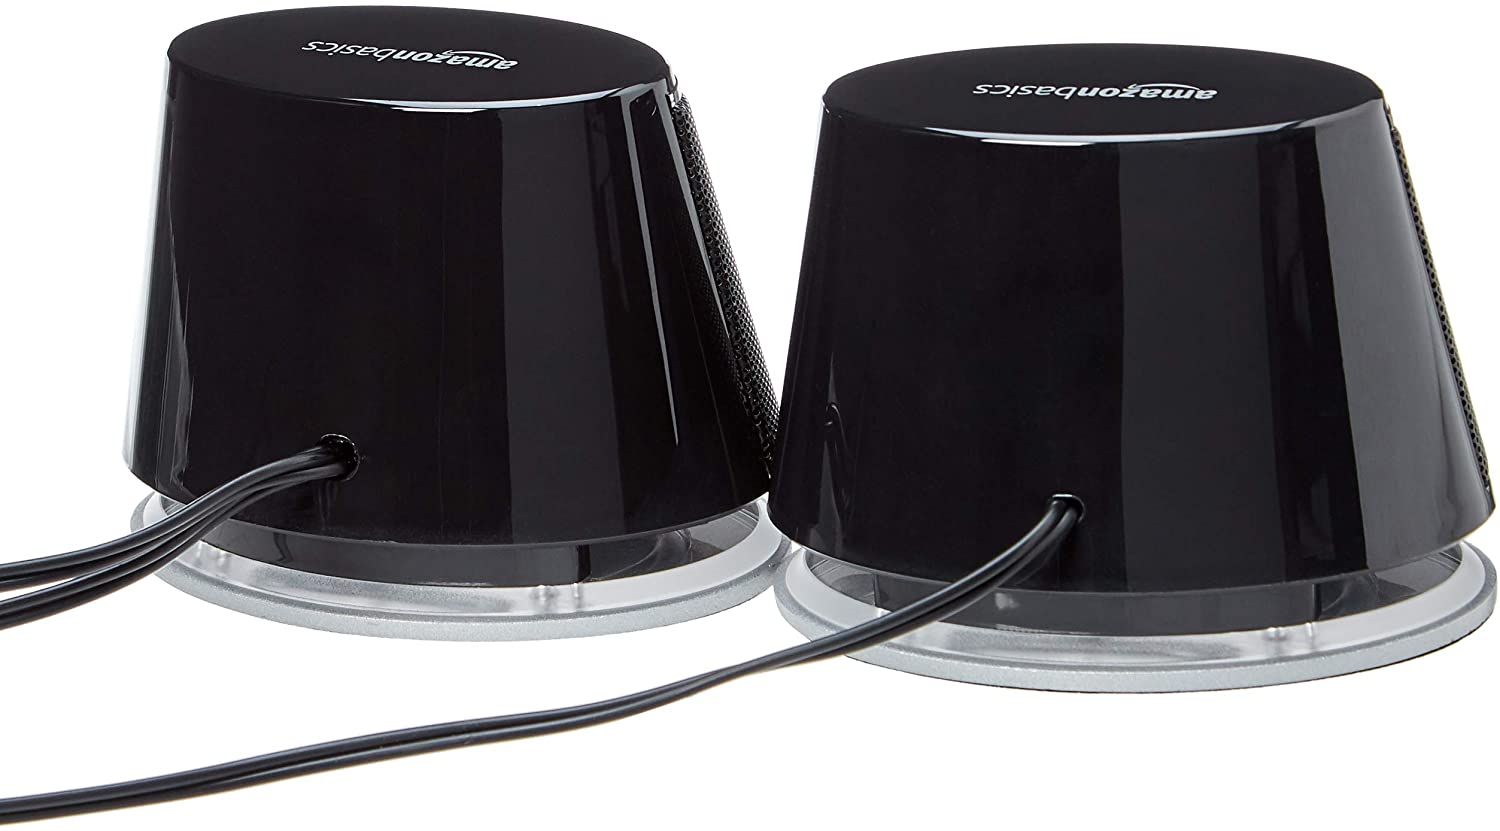 AmazonBasics USB-Powered PC Computer Speakers 2